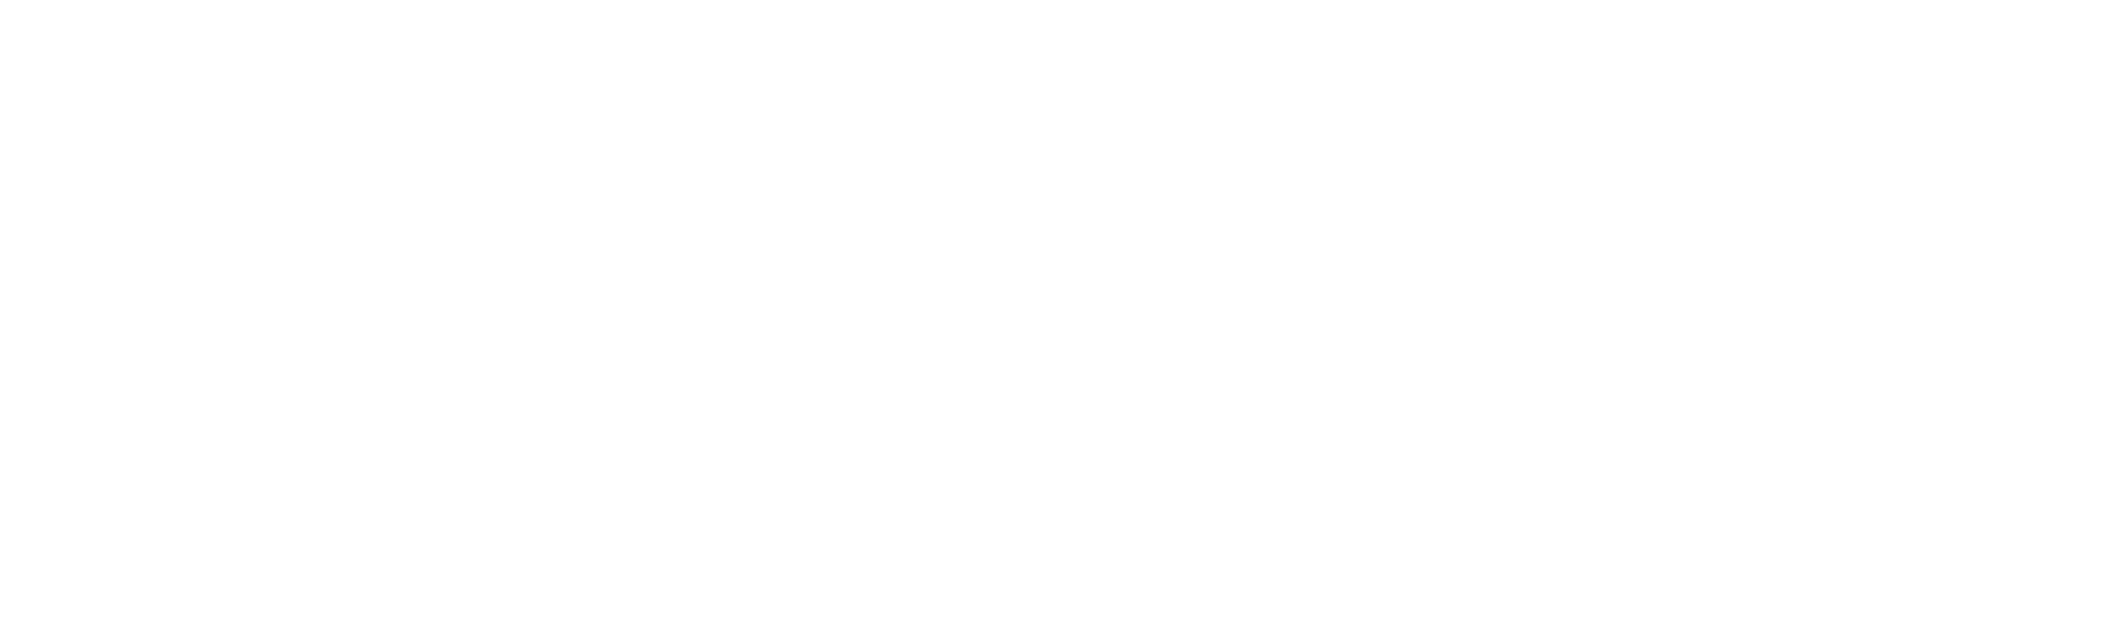 DEMOS Computer GmbH